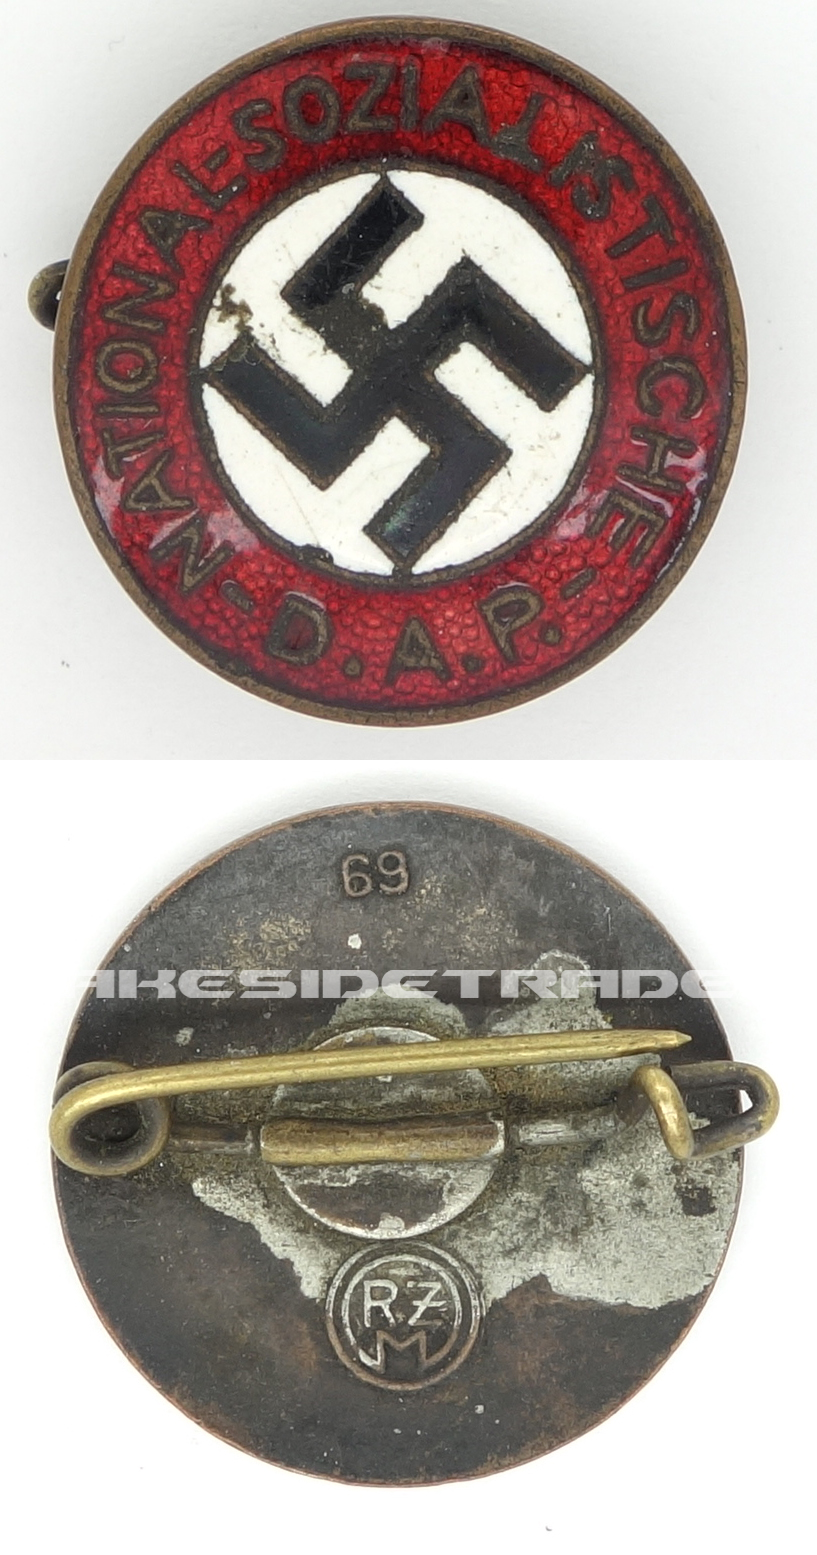 Transitional NSDAP Membership Pin by RZM 69